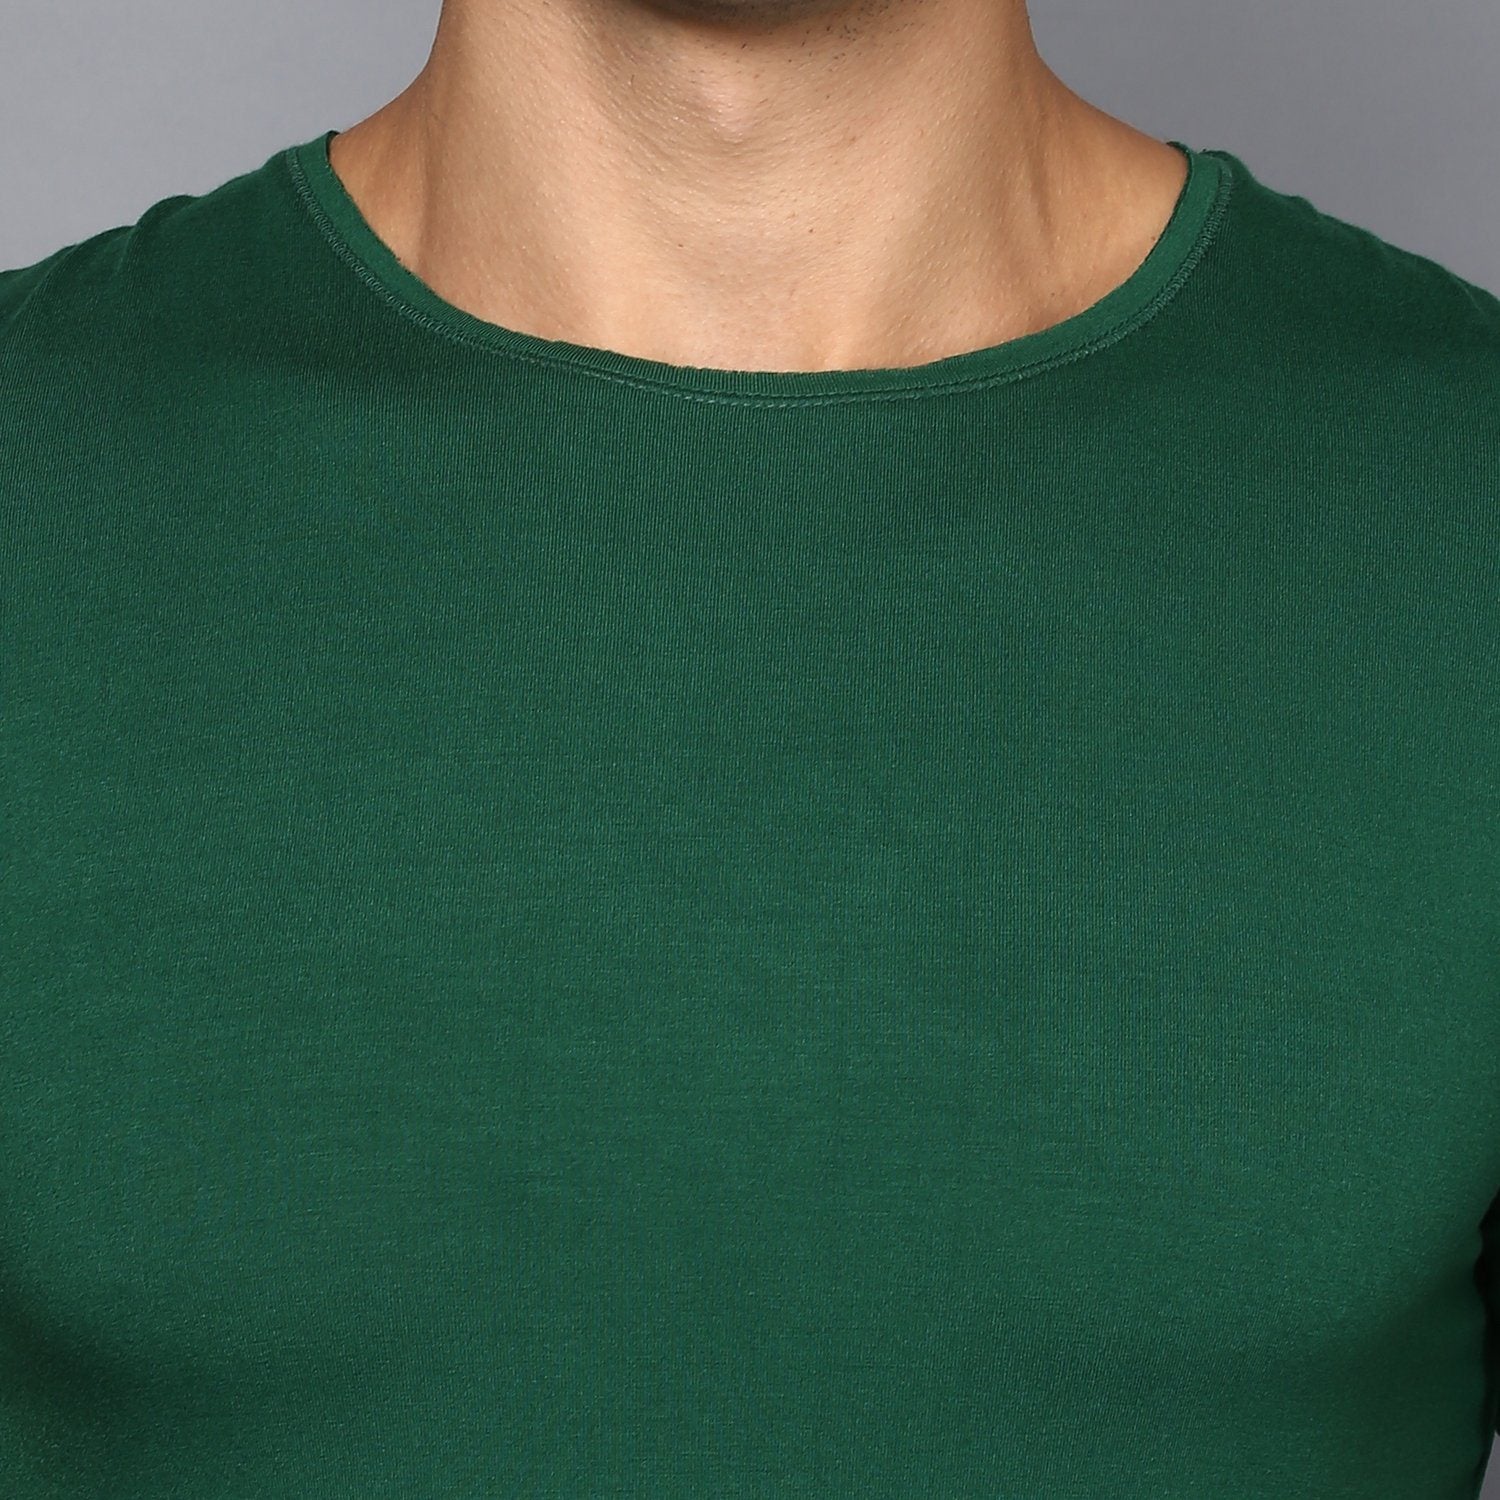 Basic Green Rib Knit T-Shirt